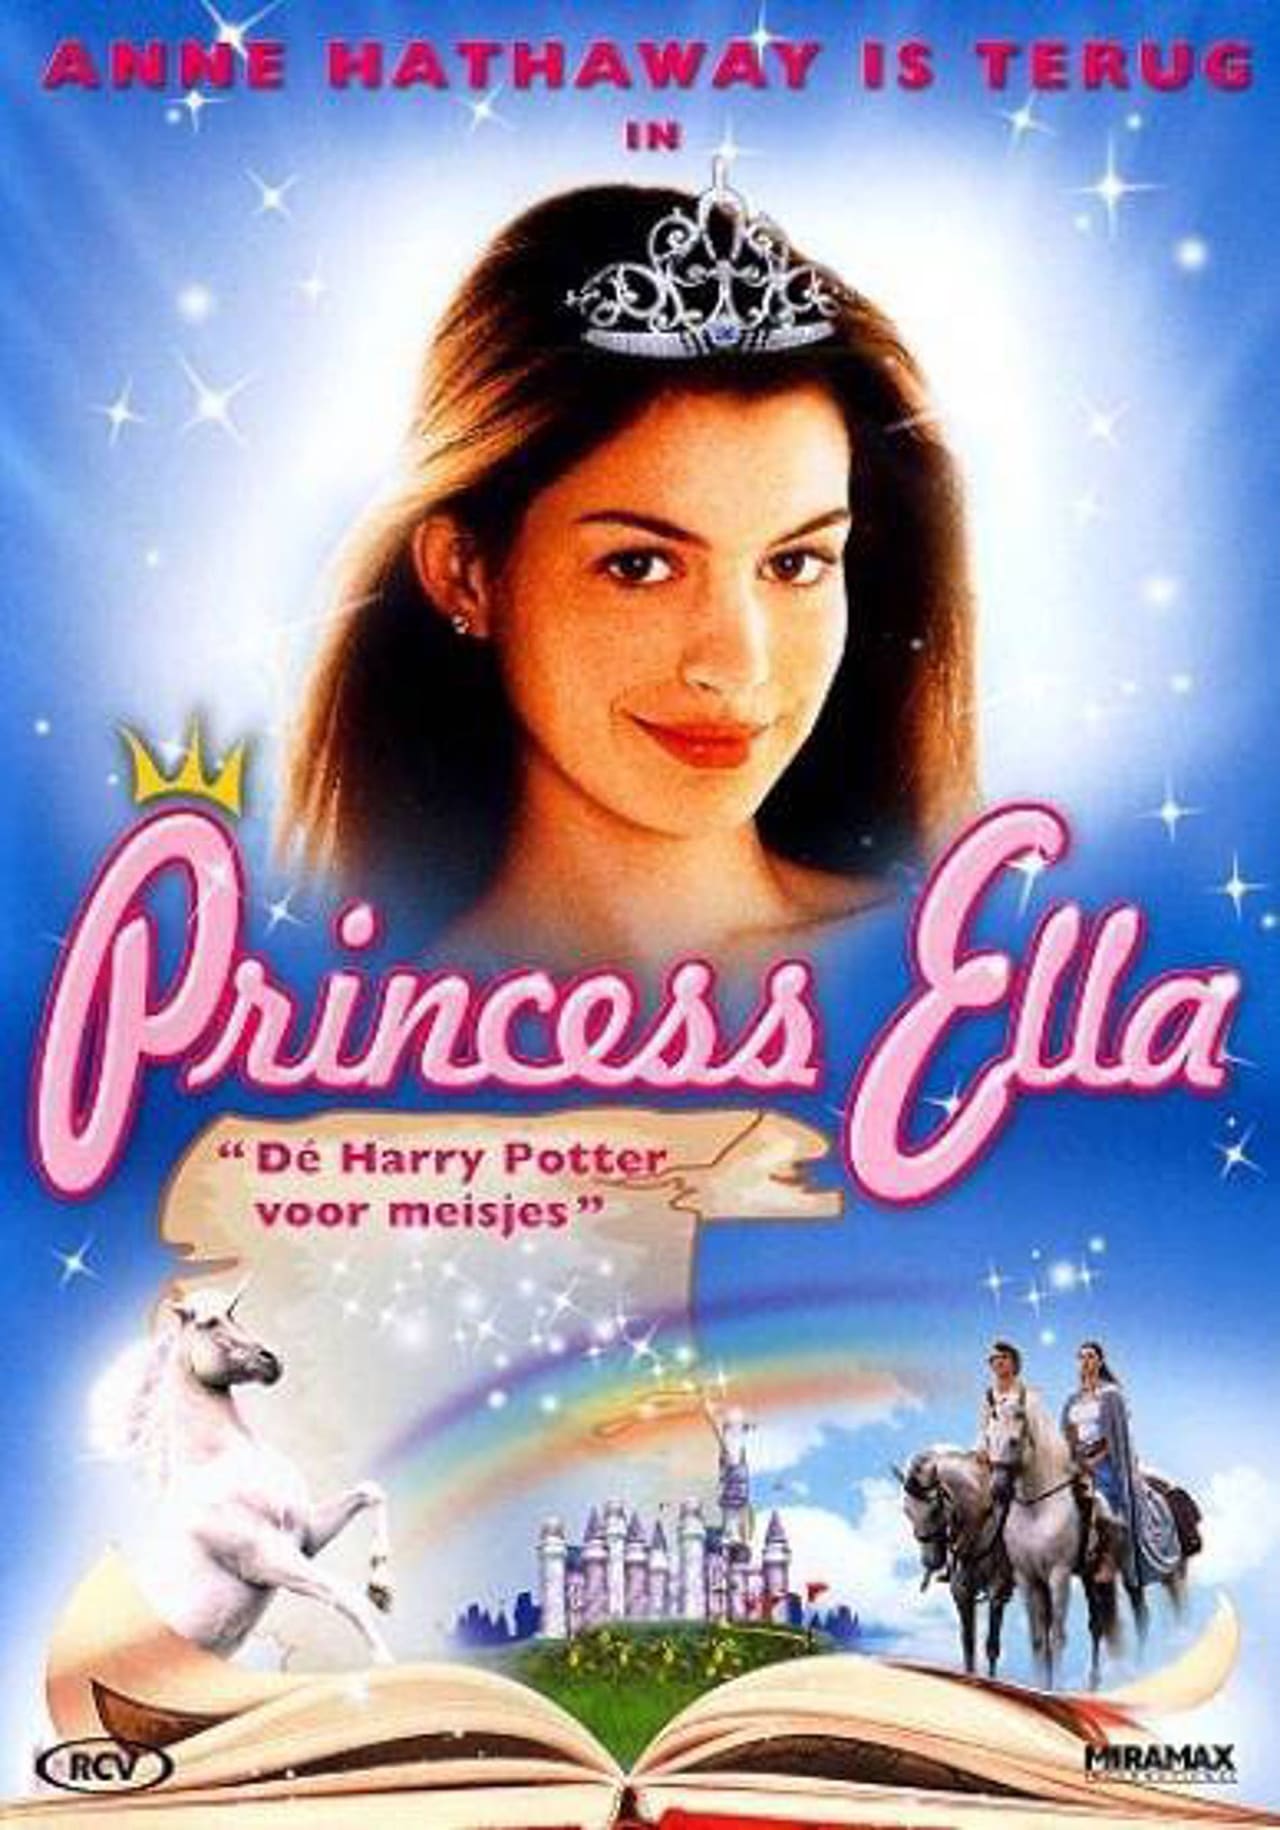 Watch Free Ella Enchanted (2004) Movie Online at putlocker ...